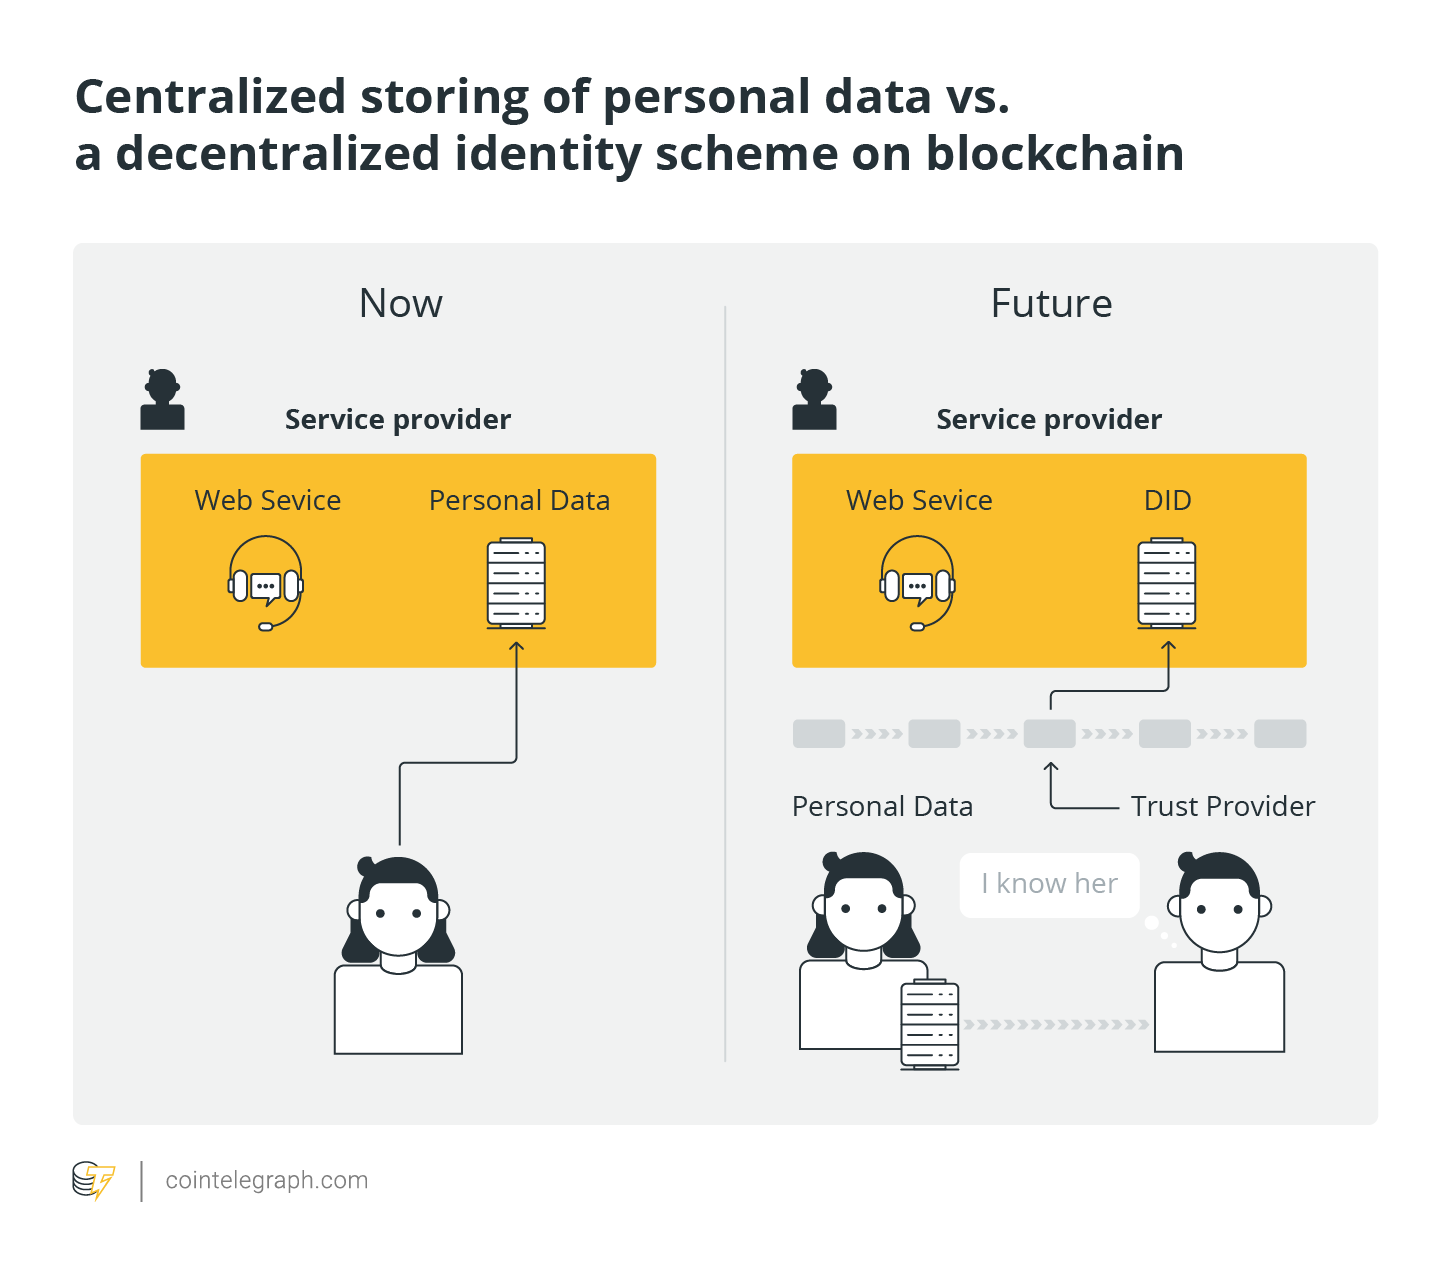 Centralized storing of personal data vs. a decentralized identity scheme on blockchain